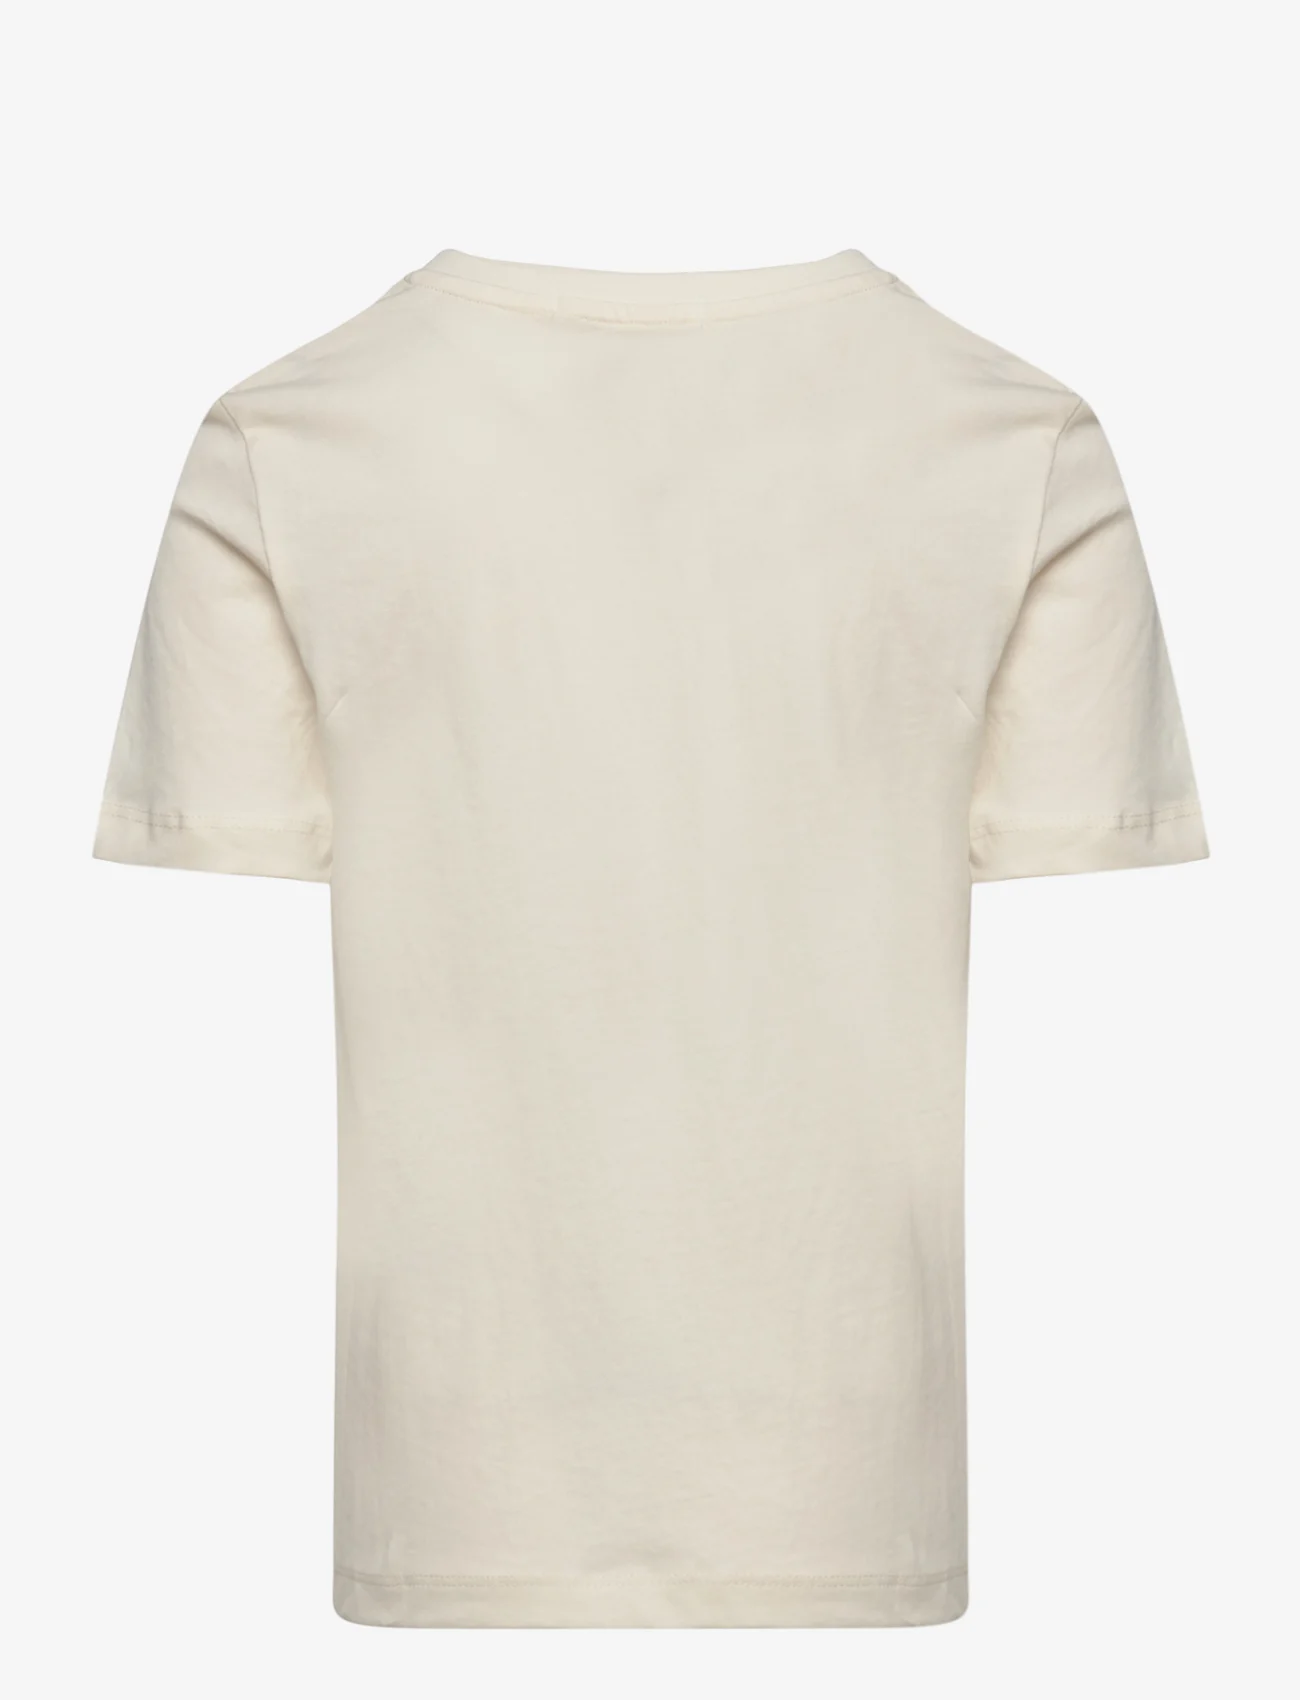 Calvin Klein - SERENITY MONOGRAM SS T-SHIRT - kortärmade t-shirts - papyrus - 1